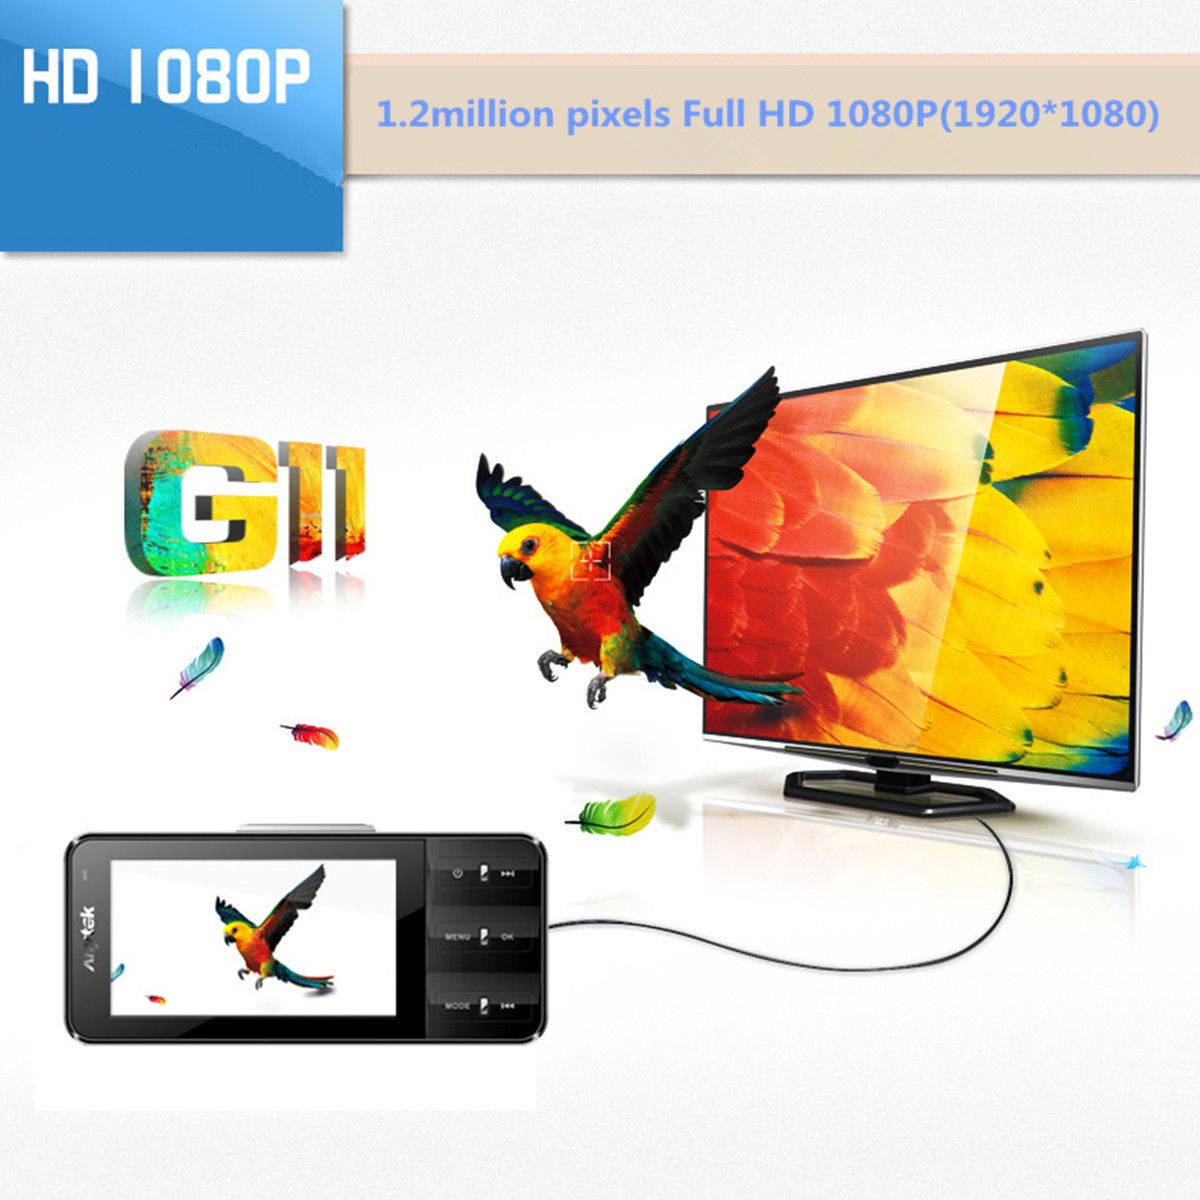 4-Inch-1080P-HD-Dual-Lens-Car-DVR-Video-Recorder-Rear-View-Mirror-Reverse-Camera-Kit-1131165